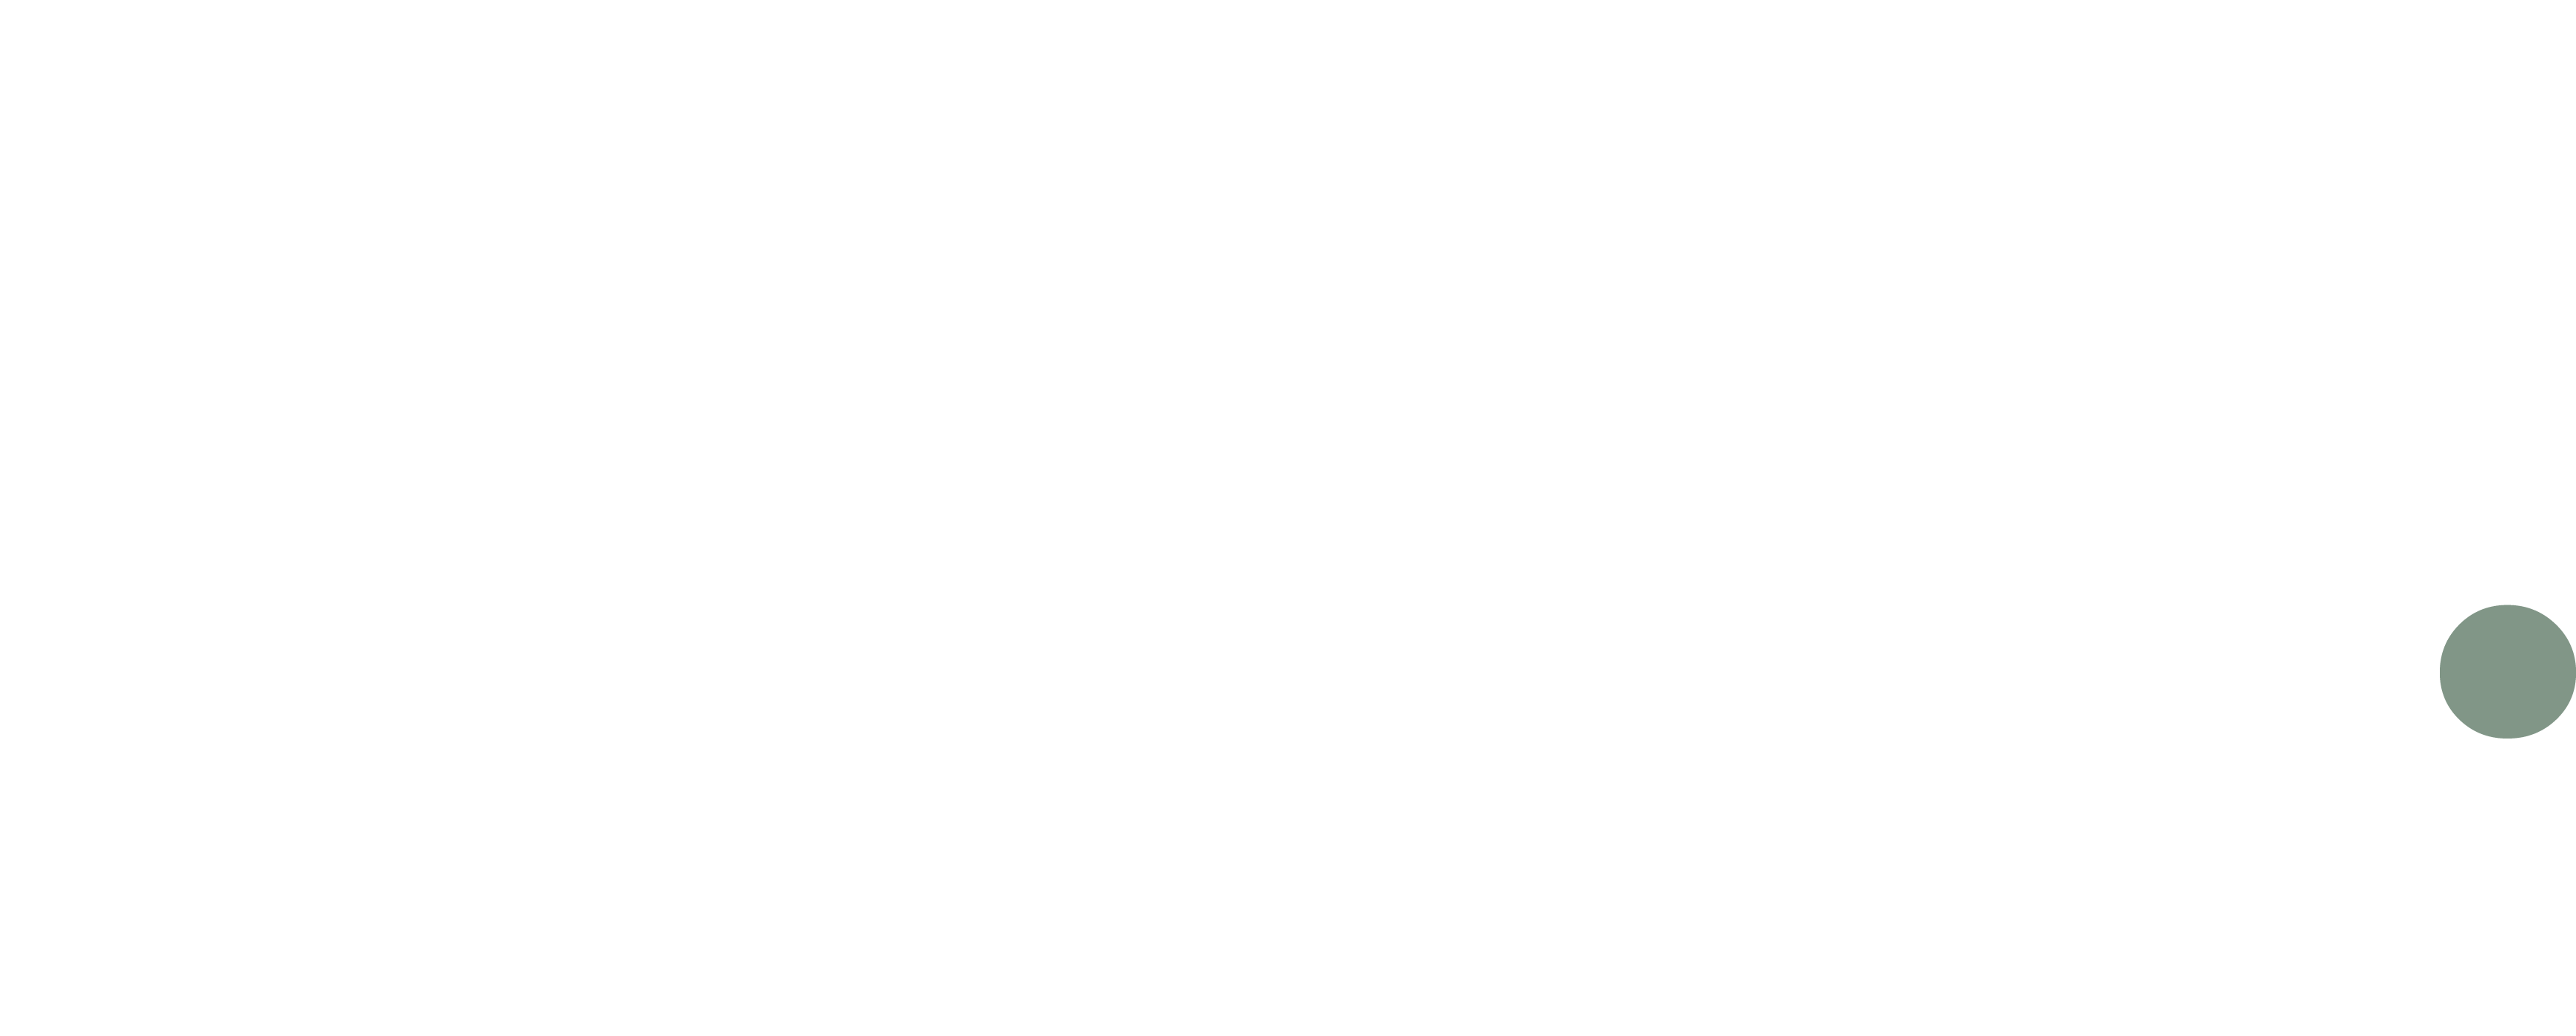 Joss Kitchen Concept Design